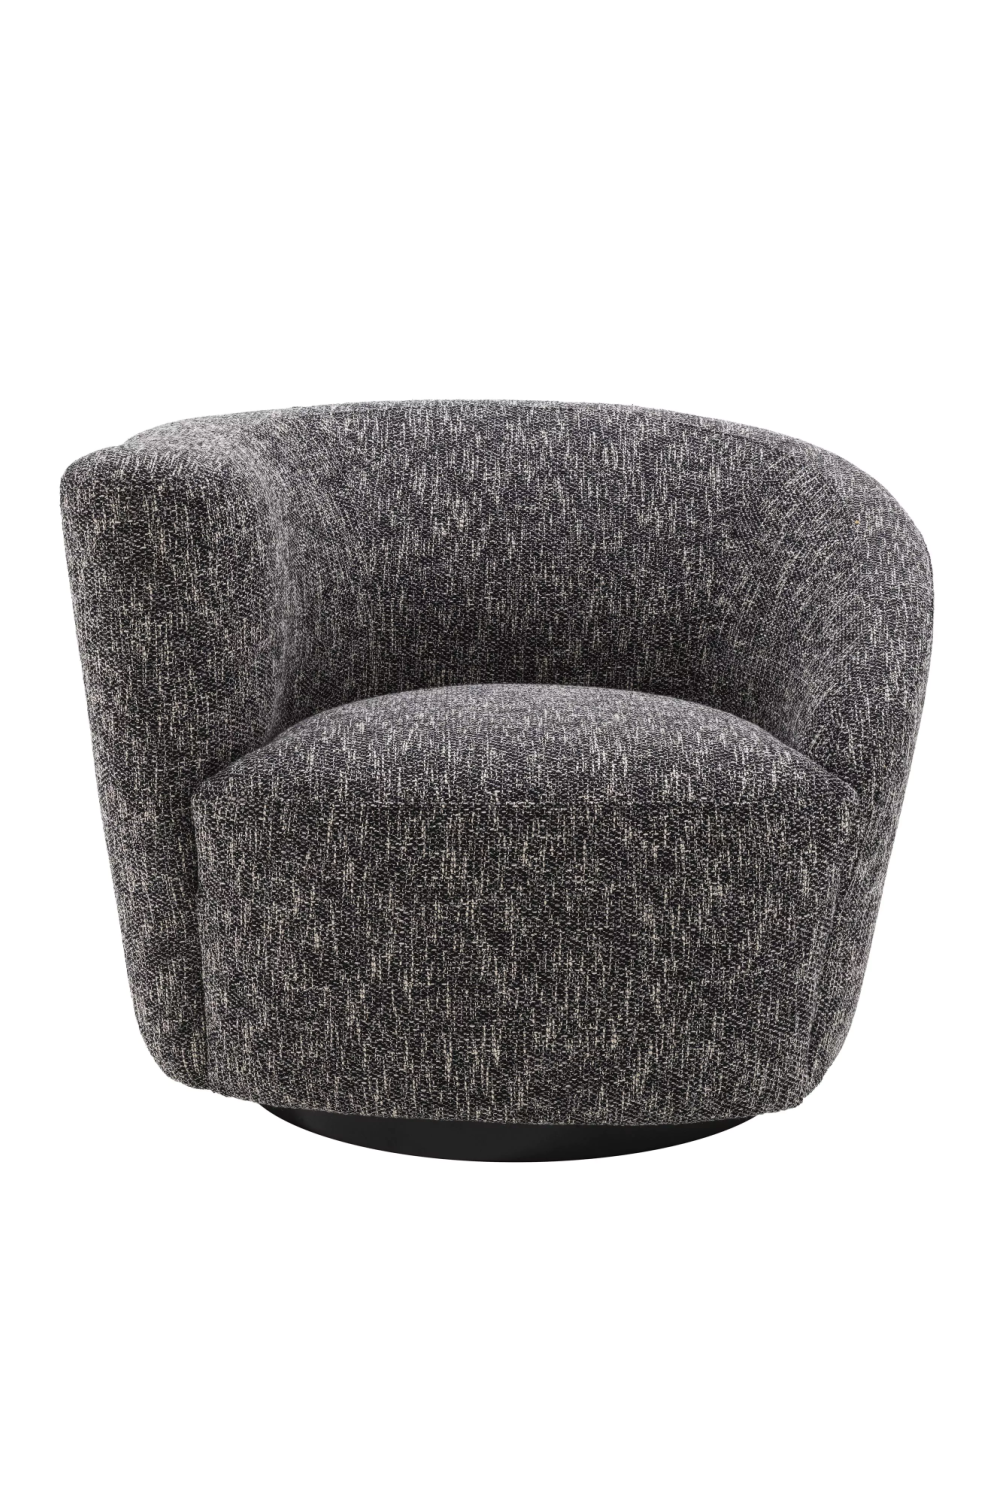 Black Asymmetrical Swivel Chair | Eichholtz Colin | Oroa.com